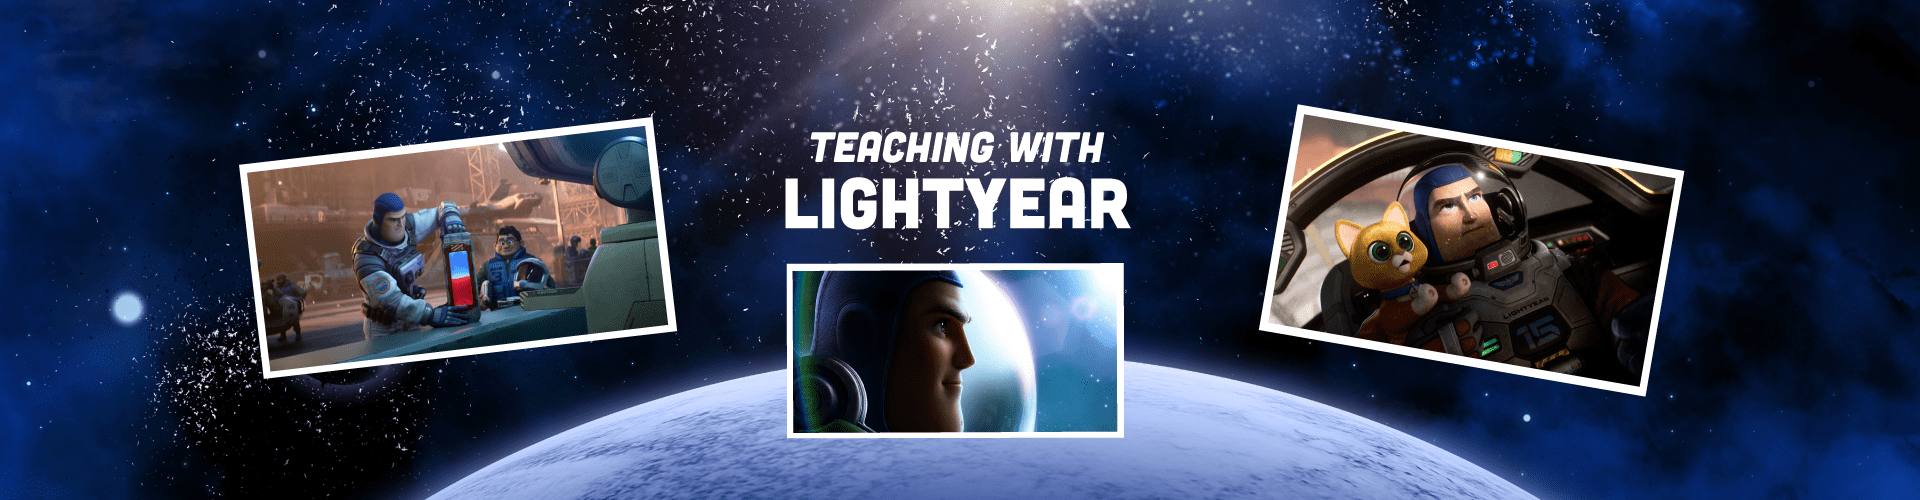 Teaching With Lightyear